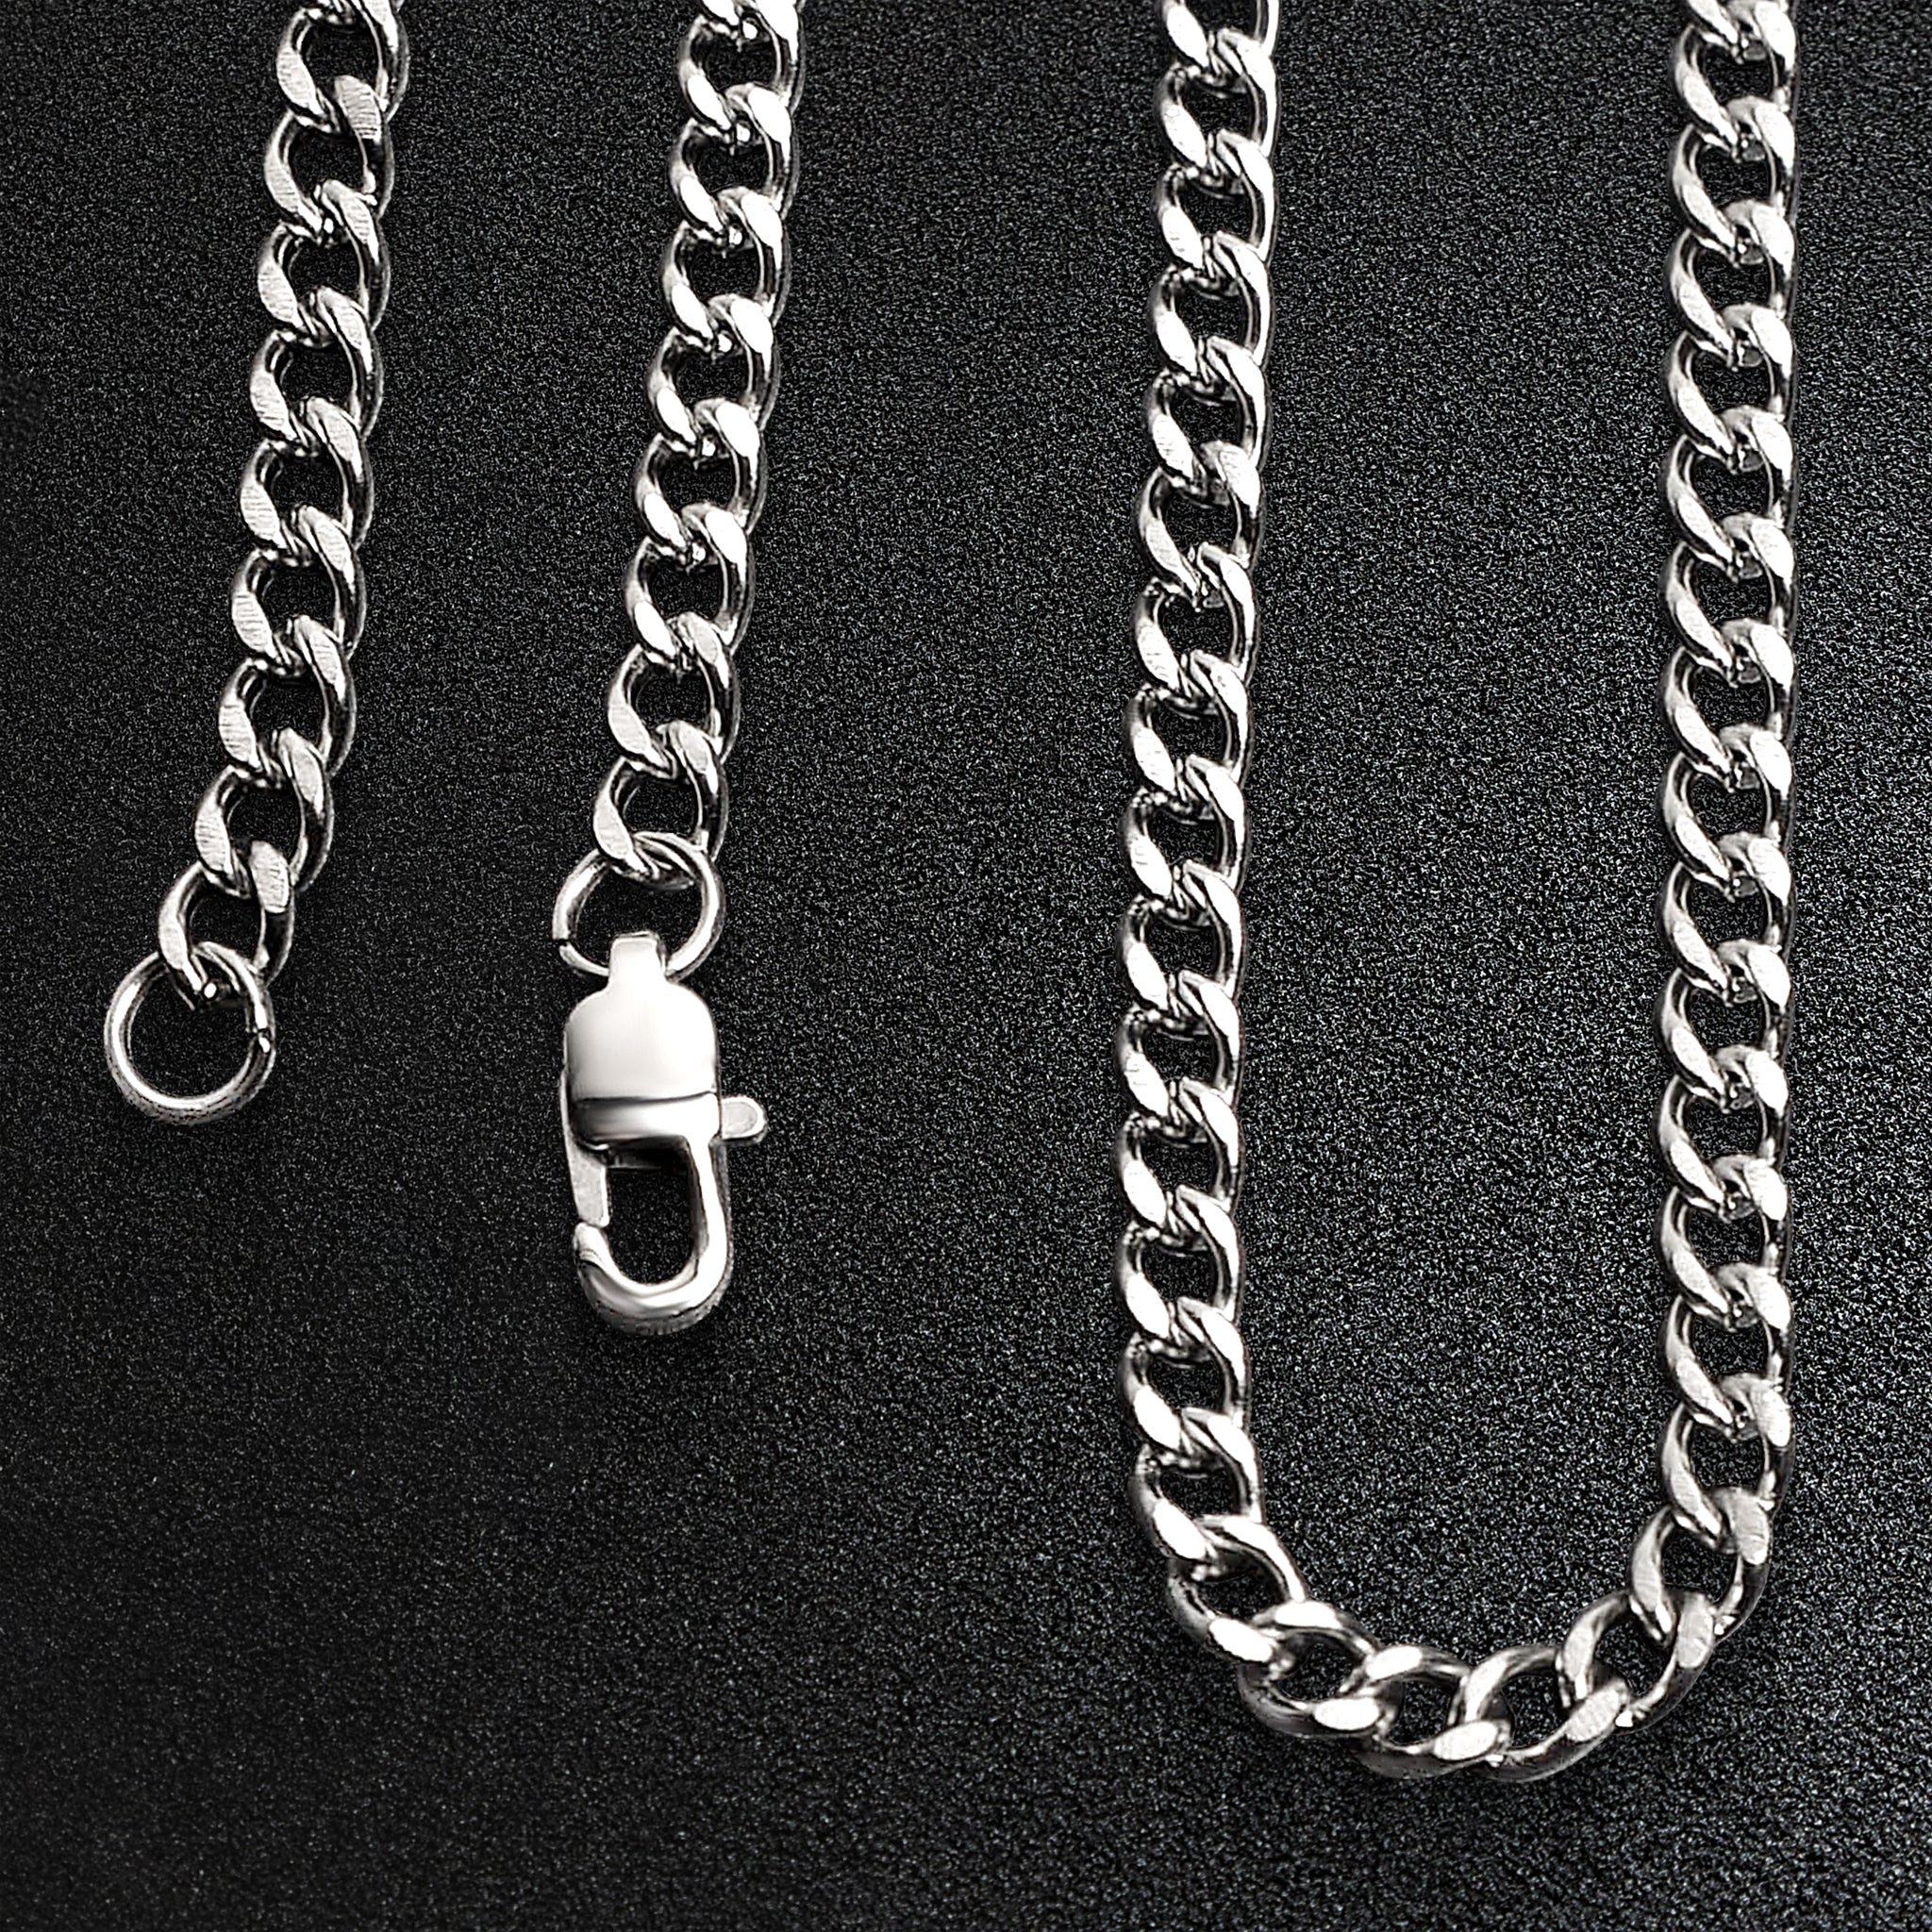 Bulk Antique Silver Link Chain Necklaces 24 - Select Quantity Pack of 20